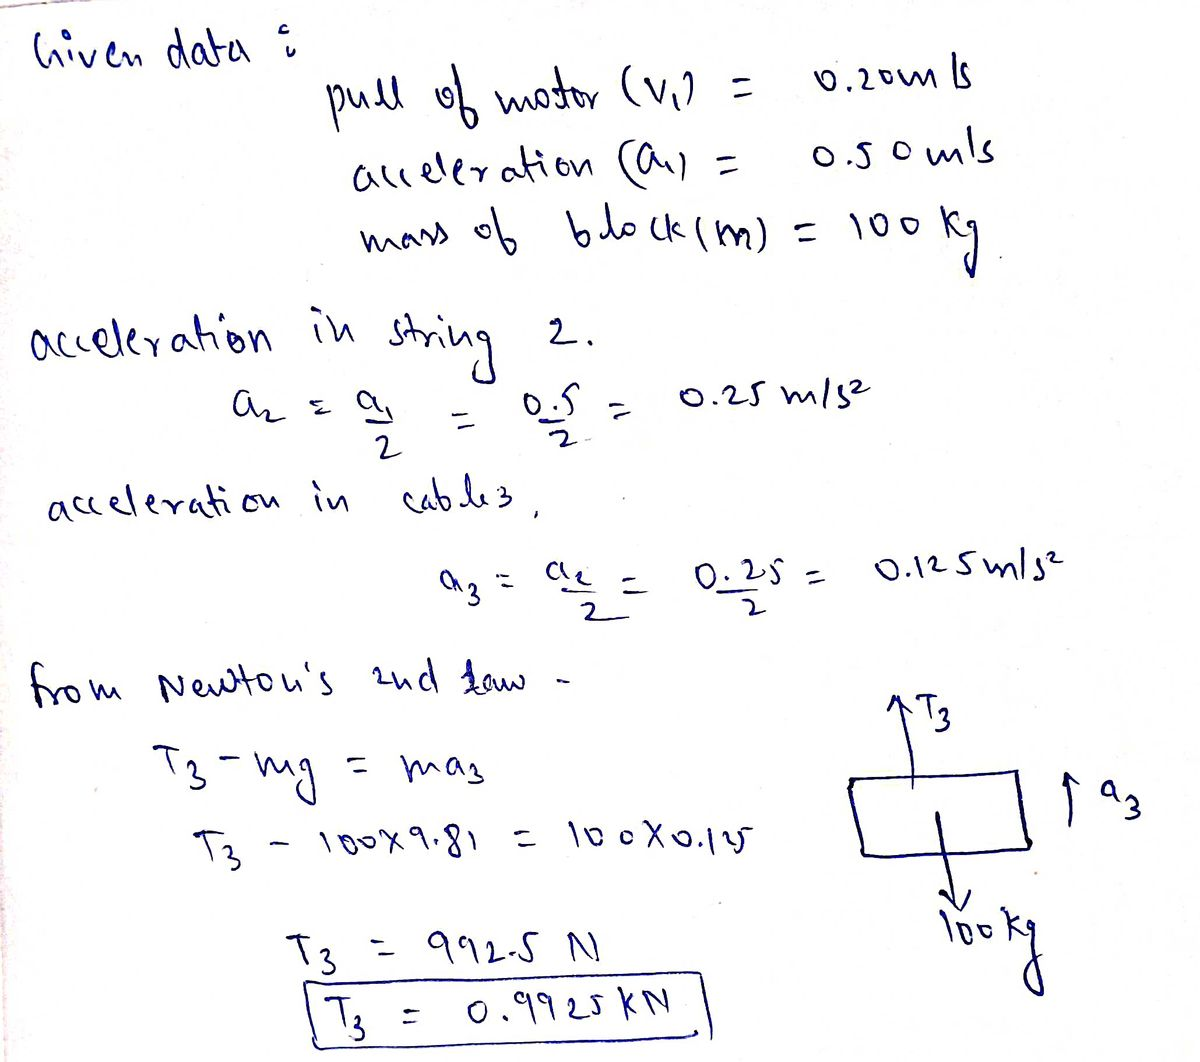 Given data E
0.2om ls
pull of motor (v,) =
alceler ation (anl
mans of
O.somls
%3D
blo ck (m) = 100
string
acceler ation in
2.
ar
0.25 m/s?
%3D
2
acceleration in cable3,
0.125mls?
a3 = d = 0-25 =
from Newtou's znd Law -
T3
T3-mg
- mag
a3
100X9.81 =1oX
T3=992-5N
0.9925 KN
T3 =
